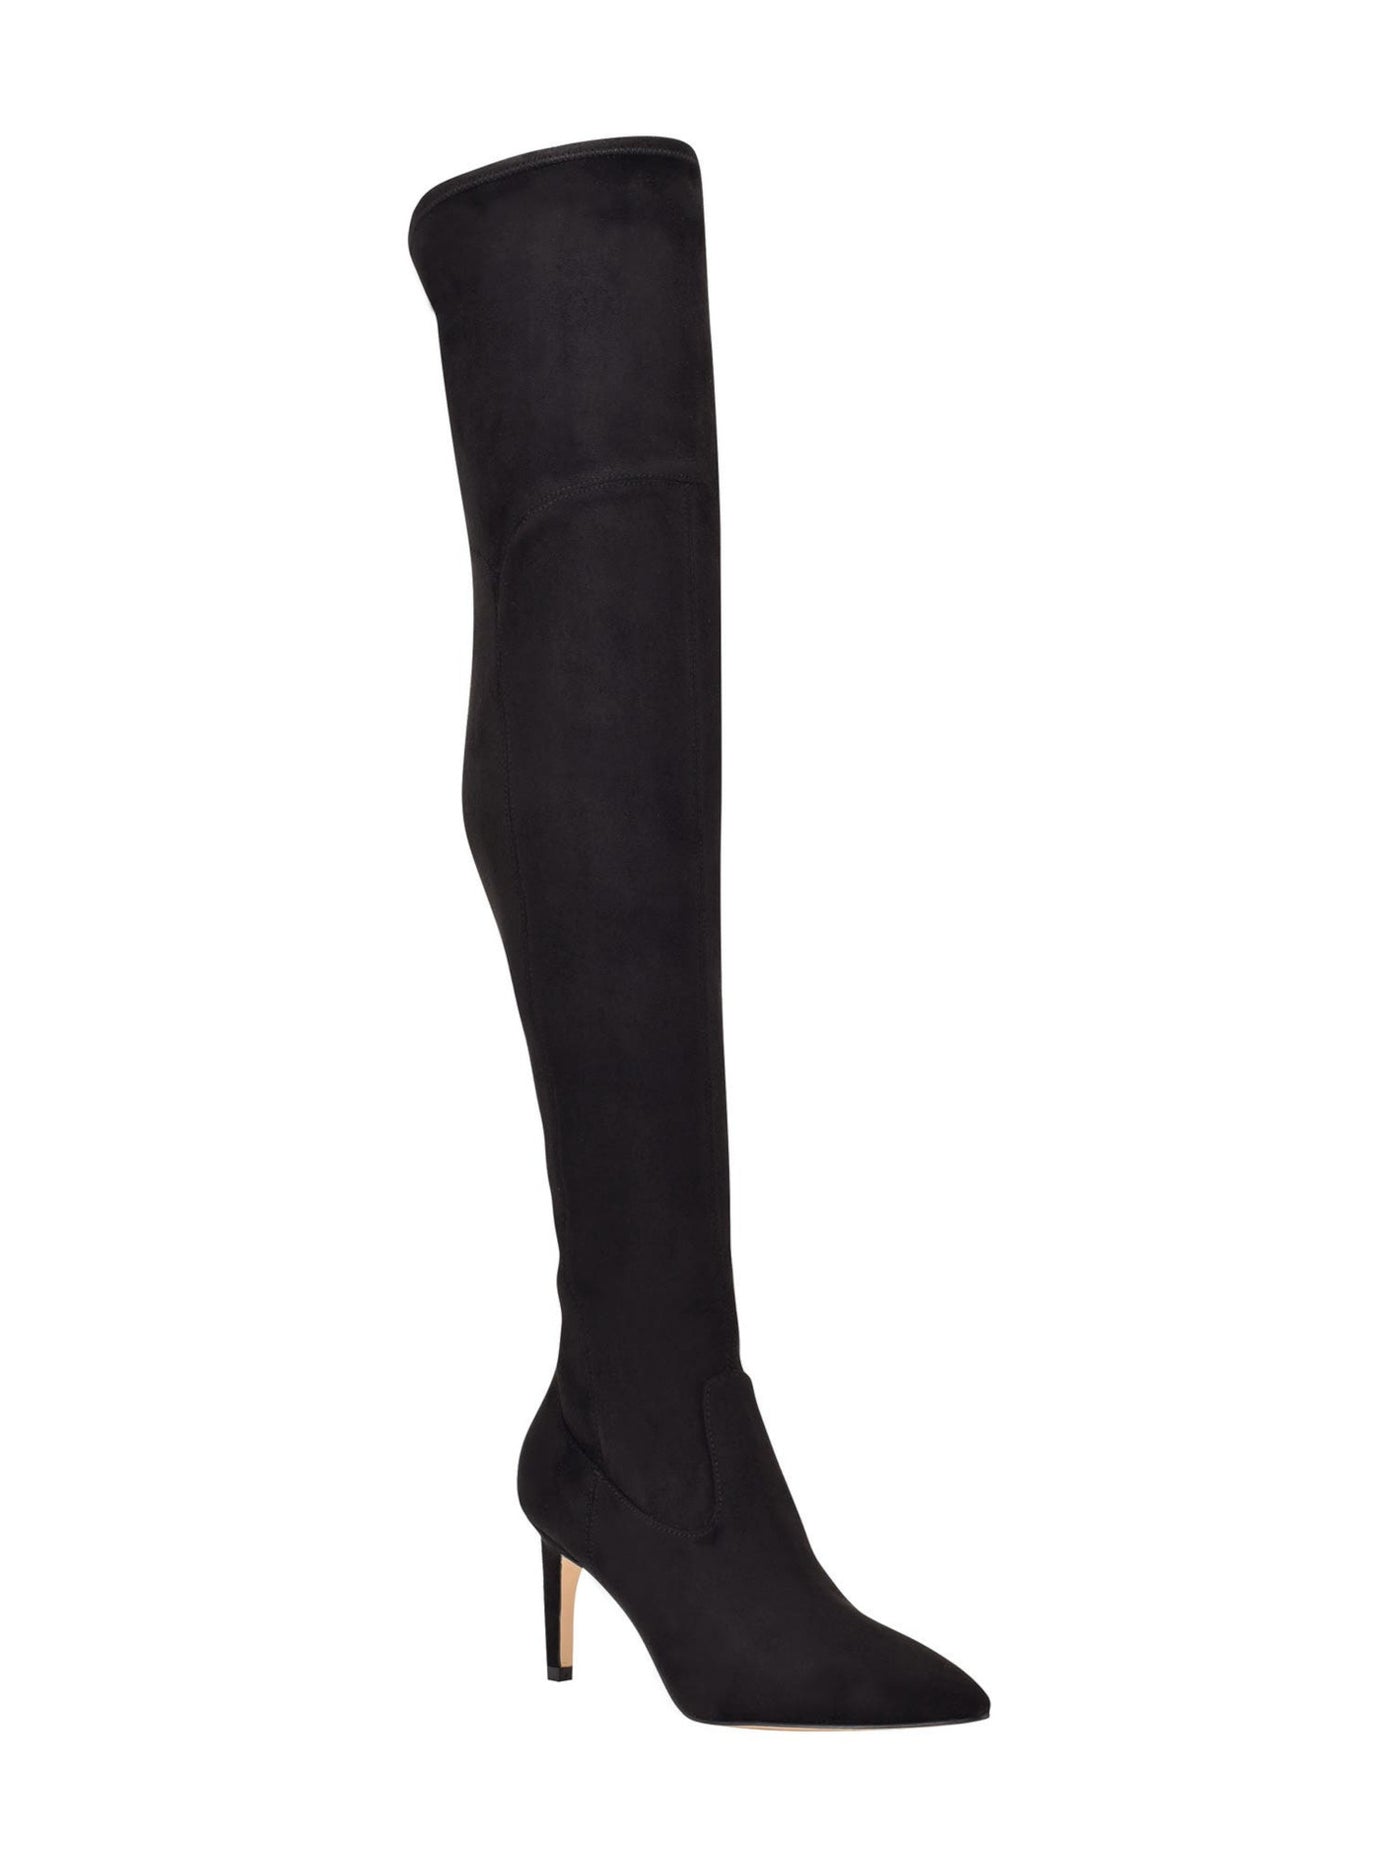 CALVIN KLEIN Womens Black Goring Sacha Pointy Toe Stiletto Zip-Up Dress Boots 8 M